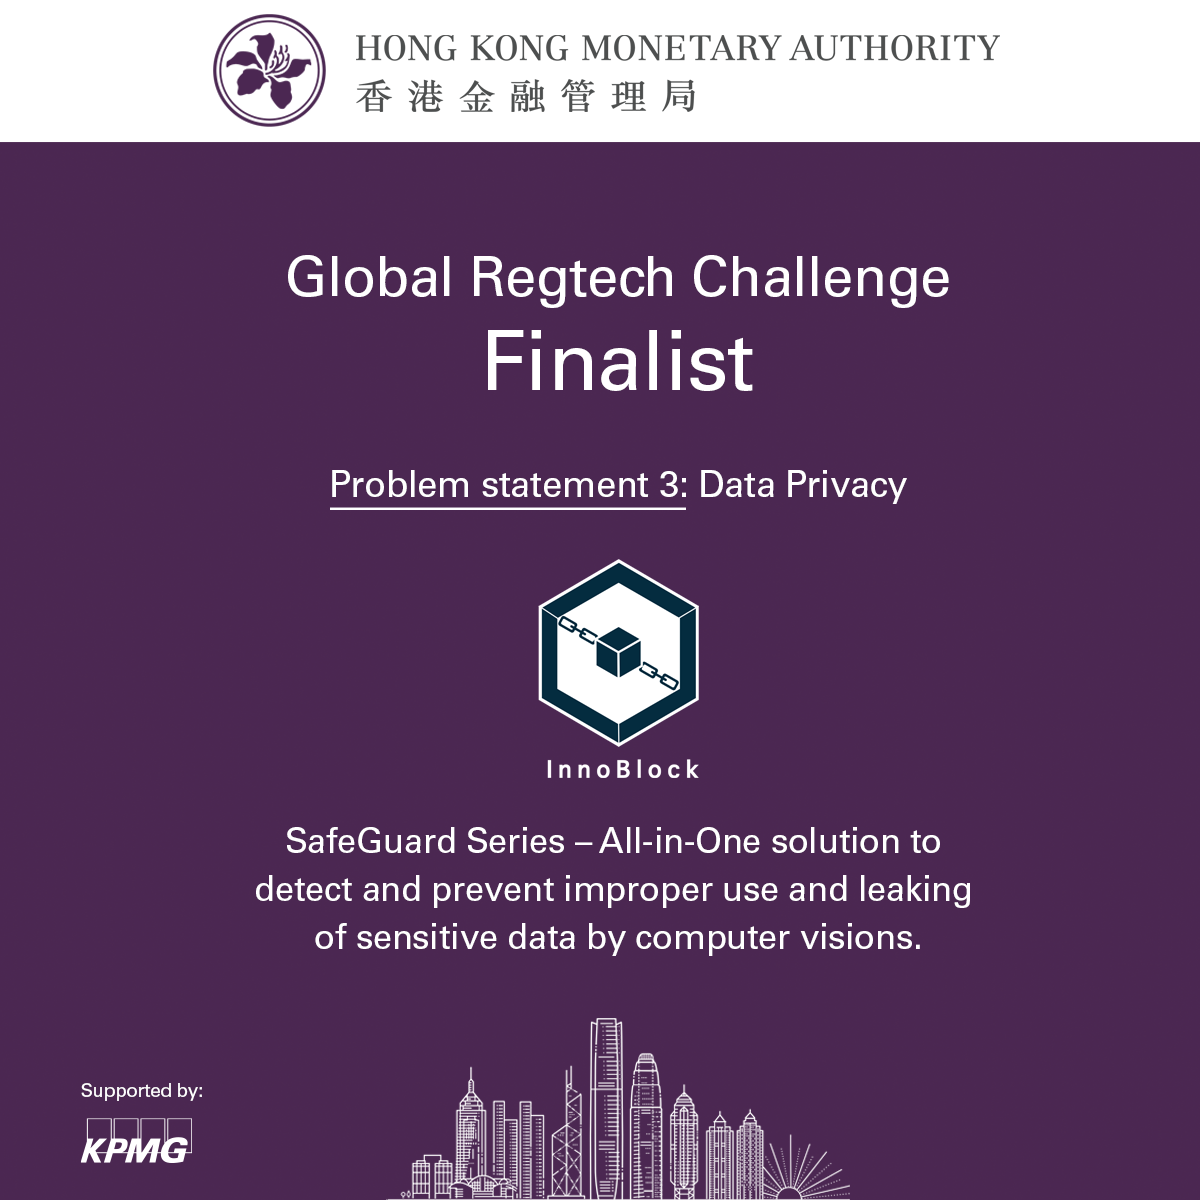 InnoBlock has been shortlisted as a finalist in HKMA’s Global Regtech Challenge